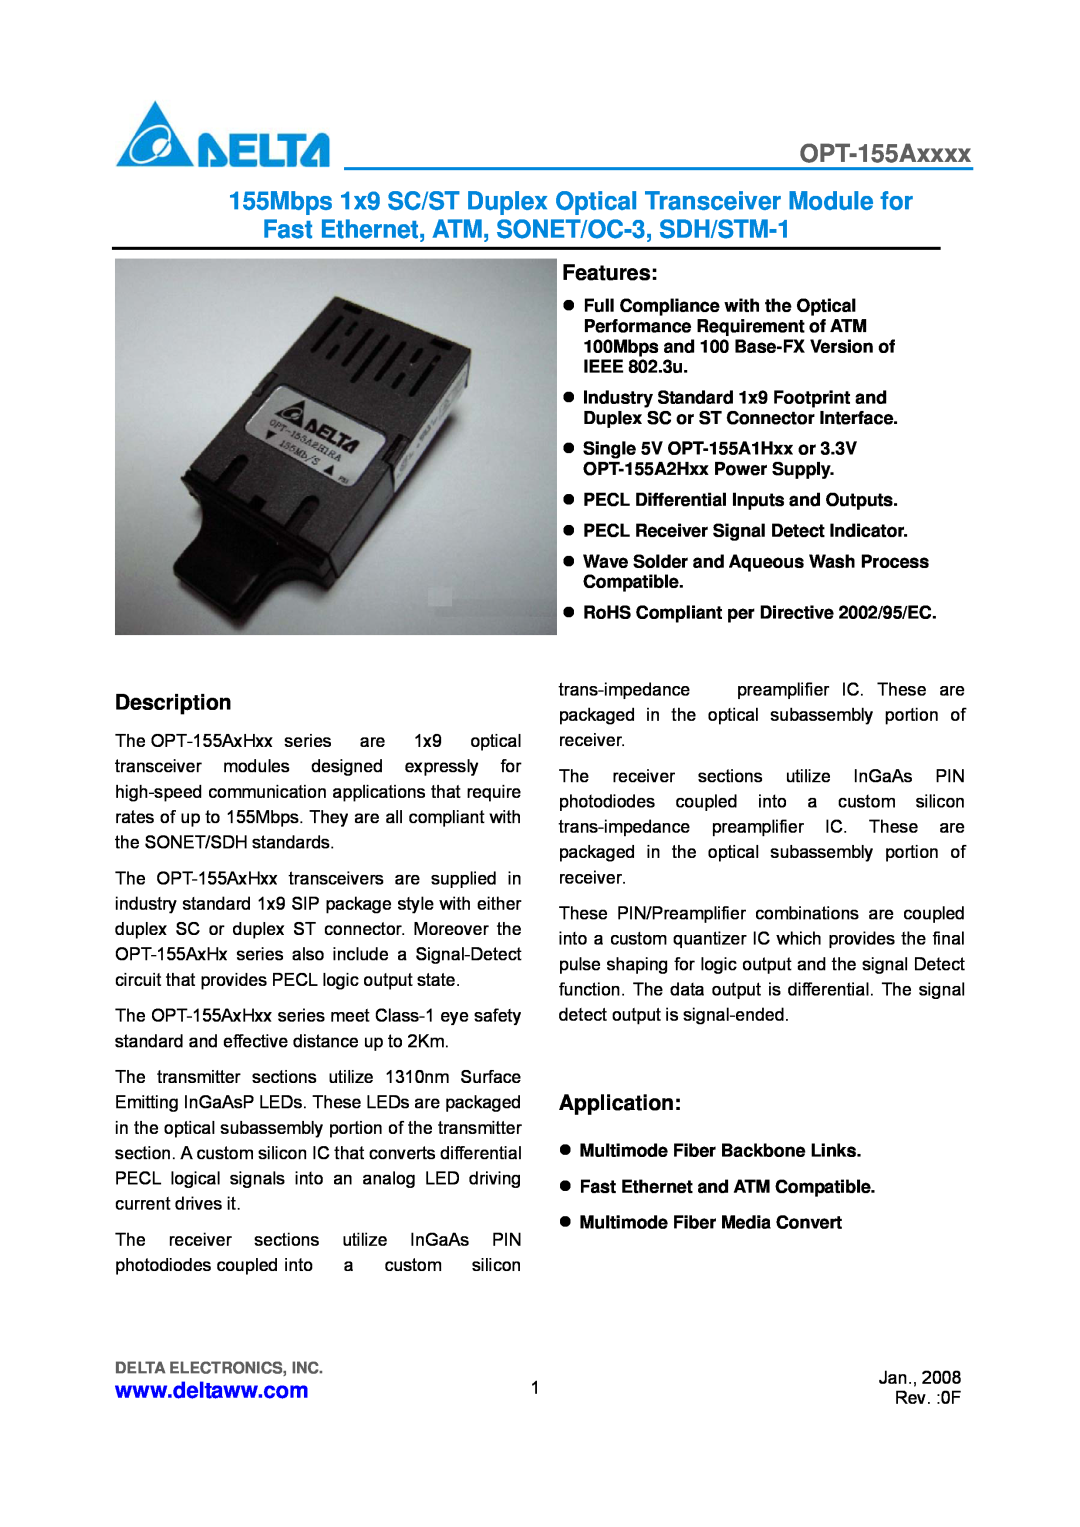 Delta Electronics OPT-155Axxxx manual Features, Description, Application 